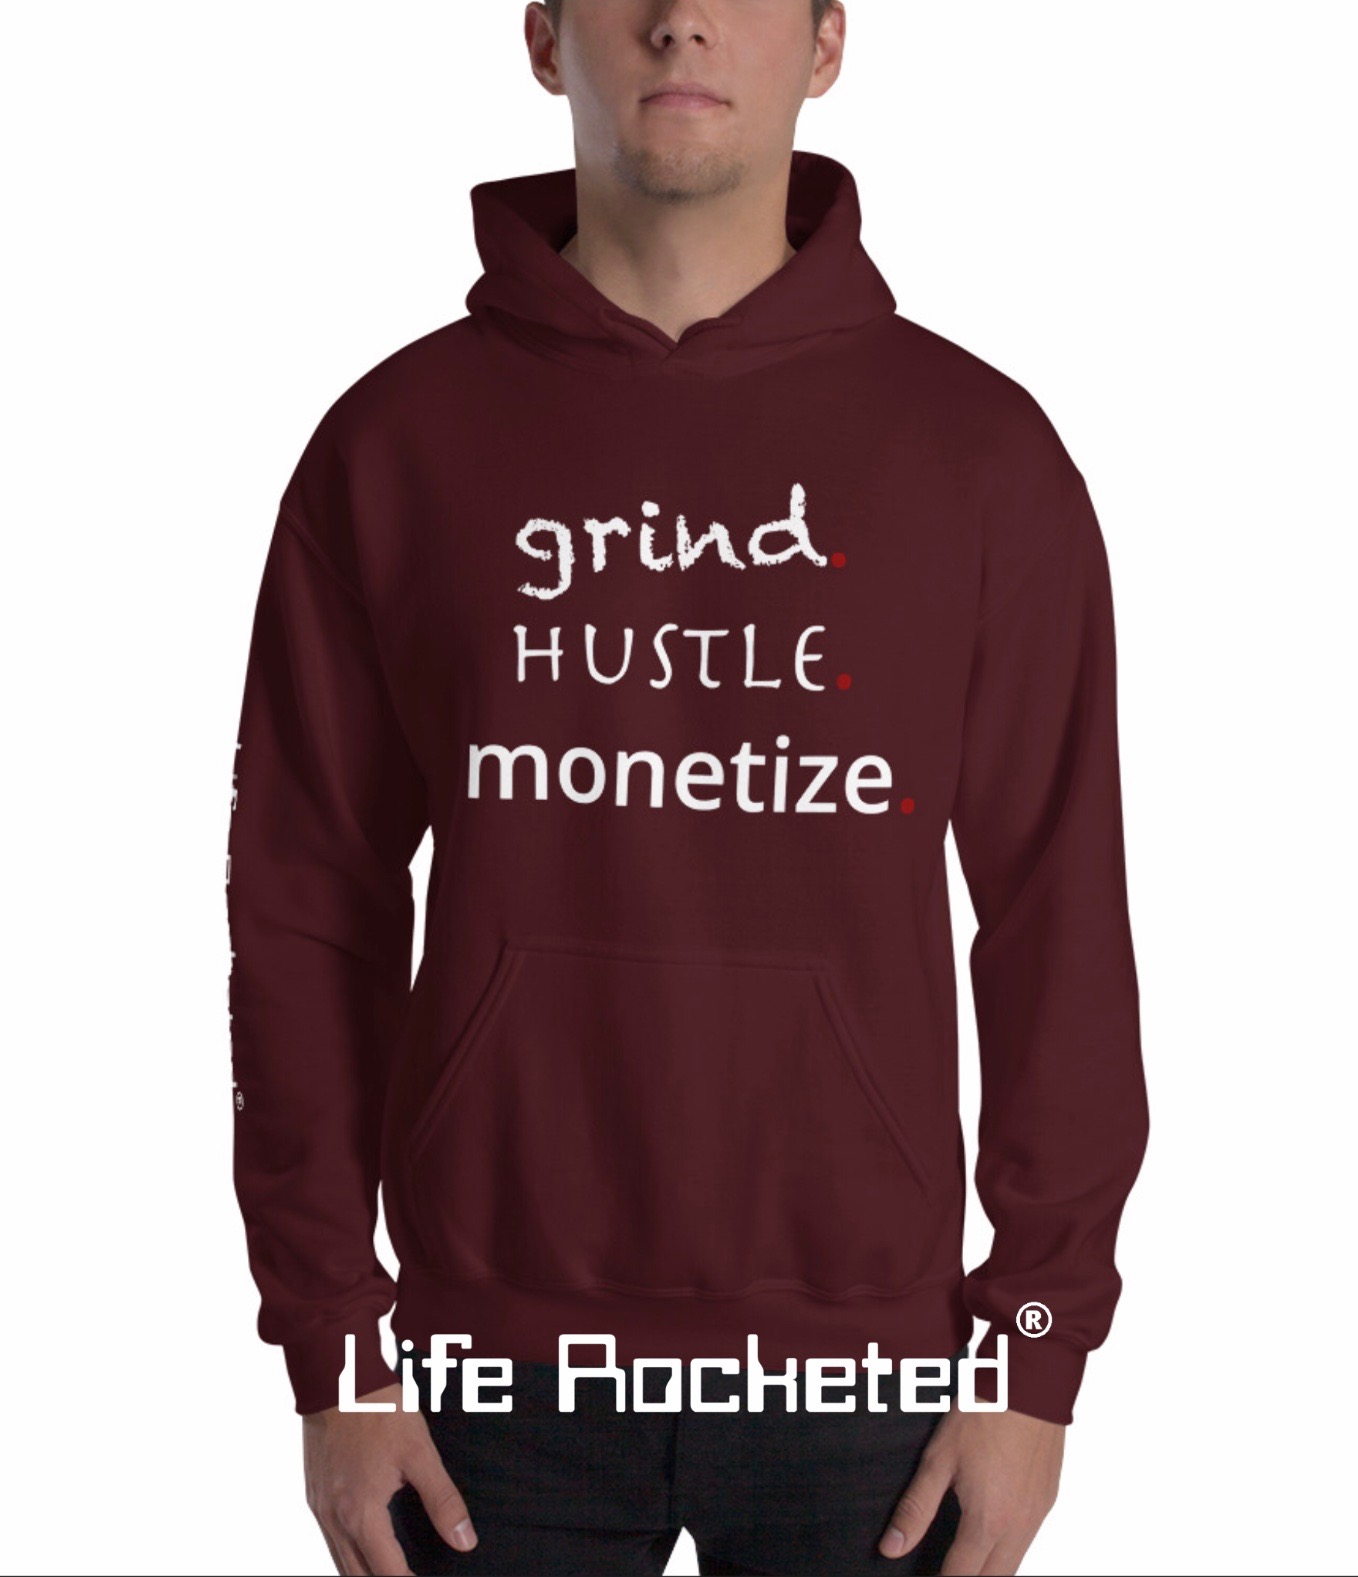 Life Rocketed grind hustle monetize hoodie